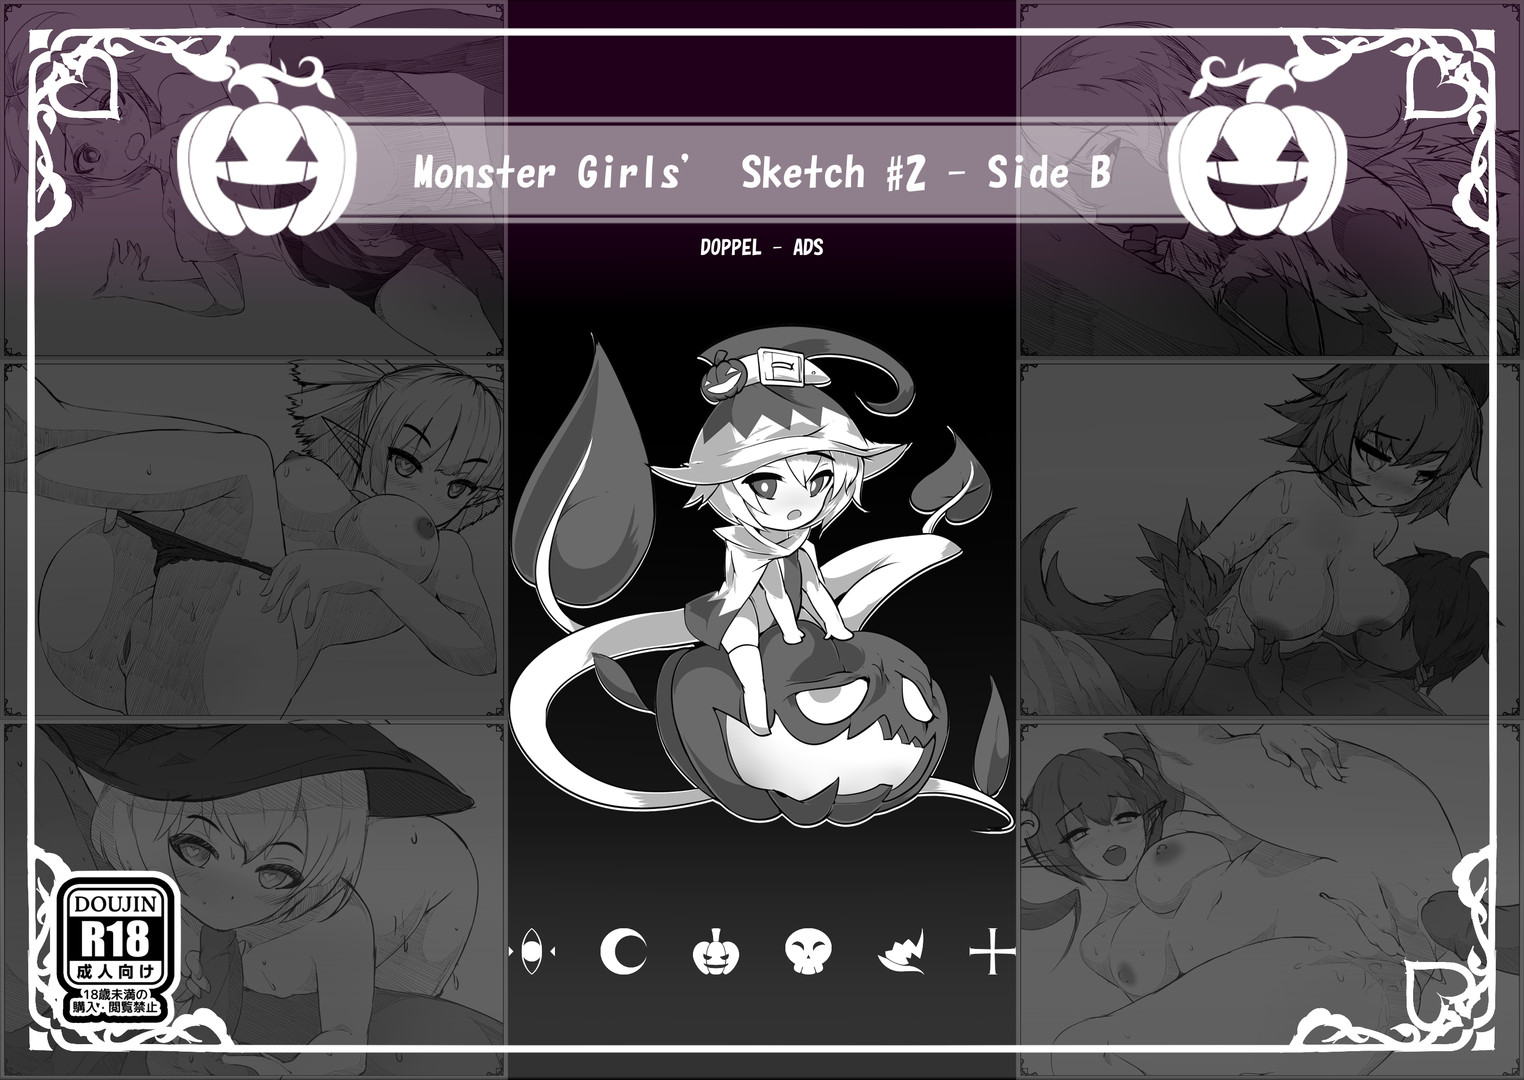 Monster Girl Sketch Vol.02B DLC Steam CD Key 4.52 $